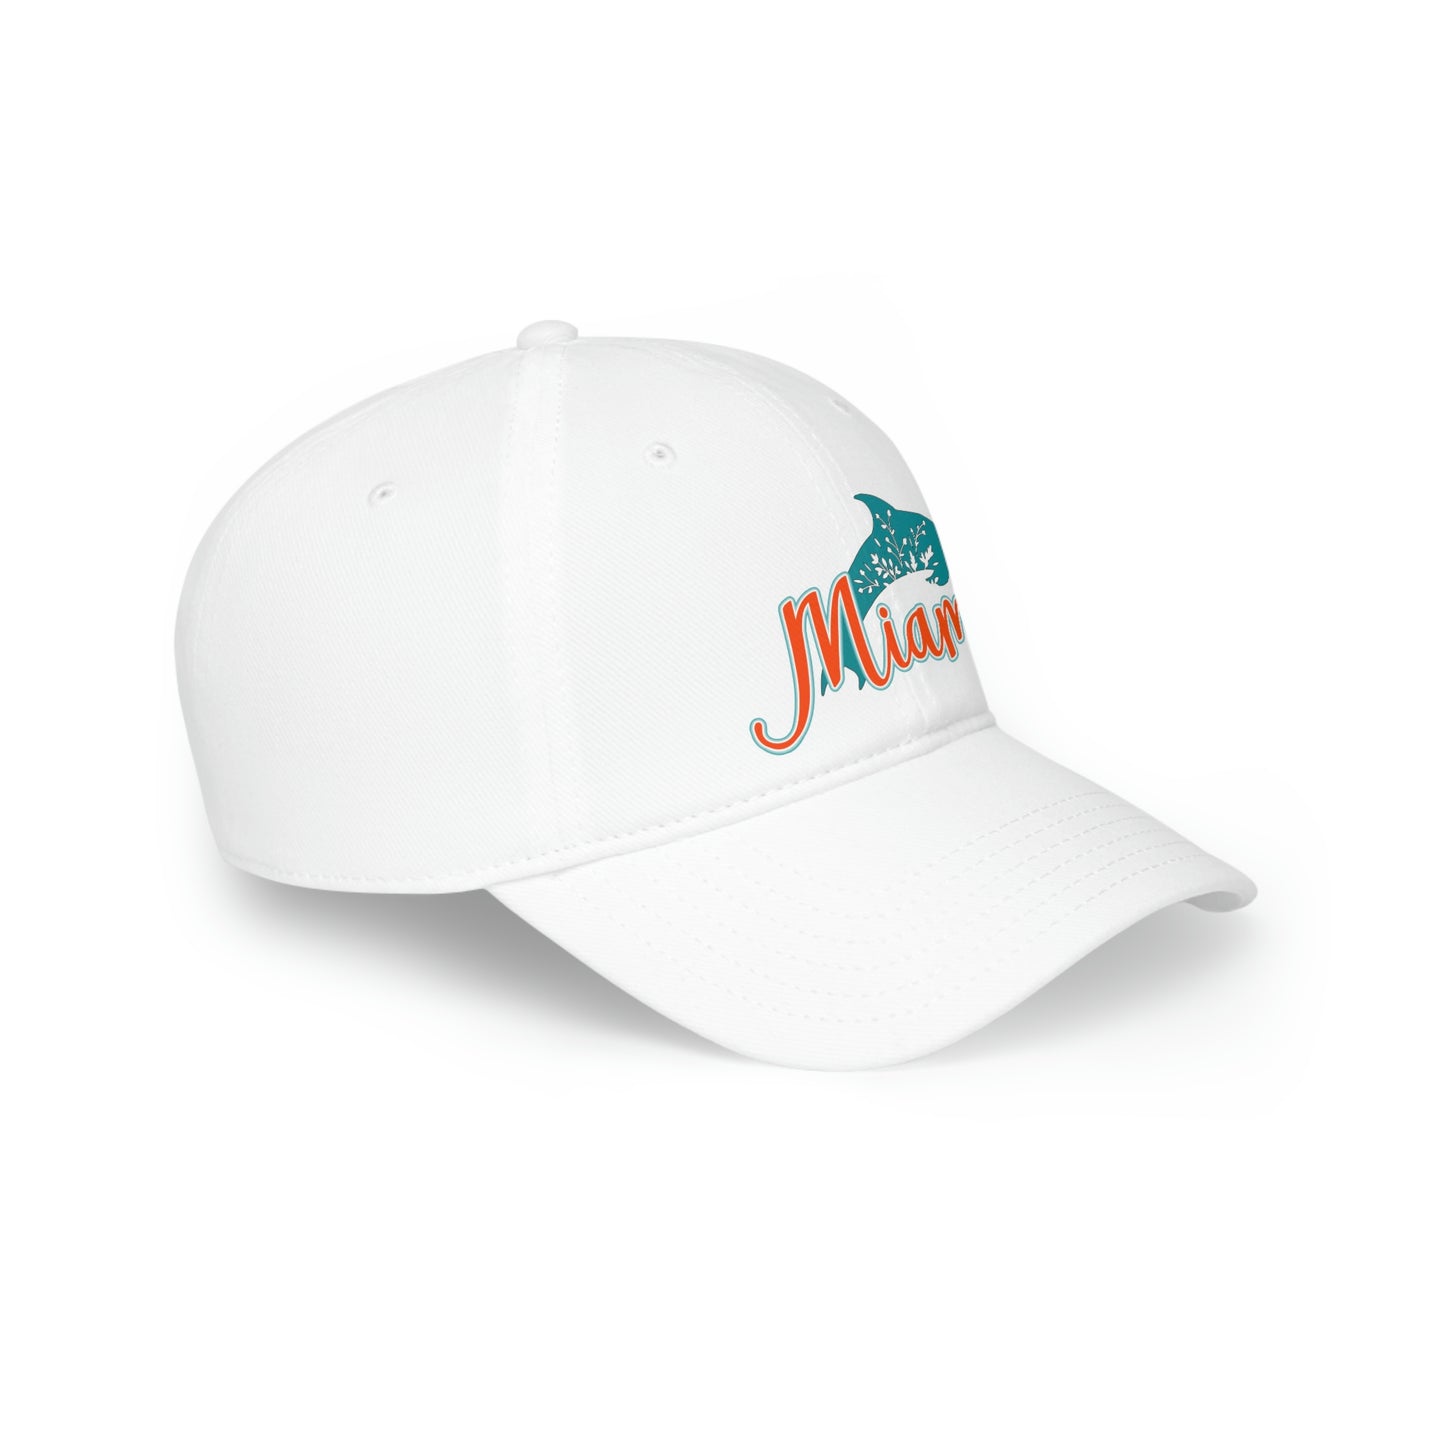 Miami Low Profile Dolphins Baseball Cap Adjustable Velcro closure Unisex